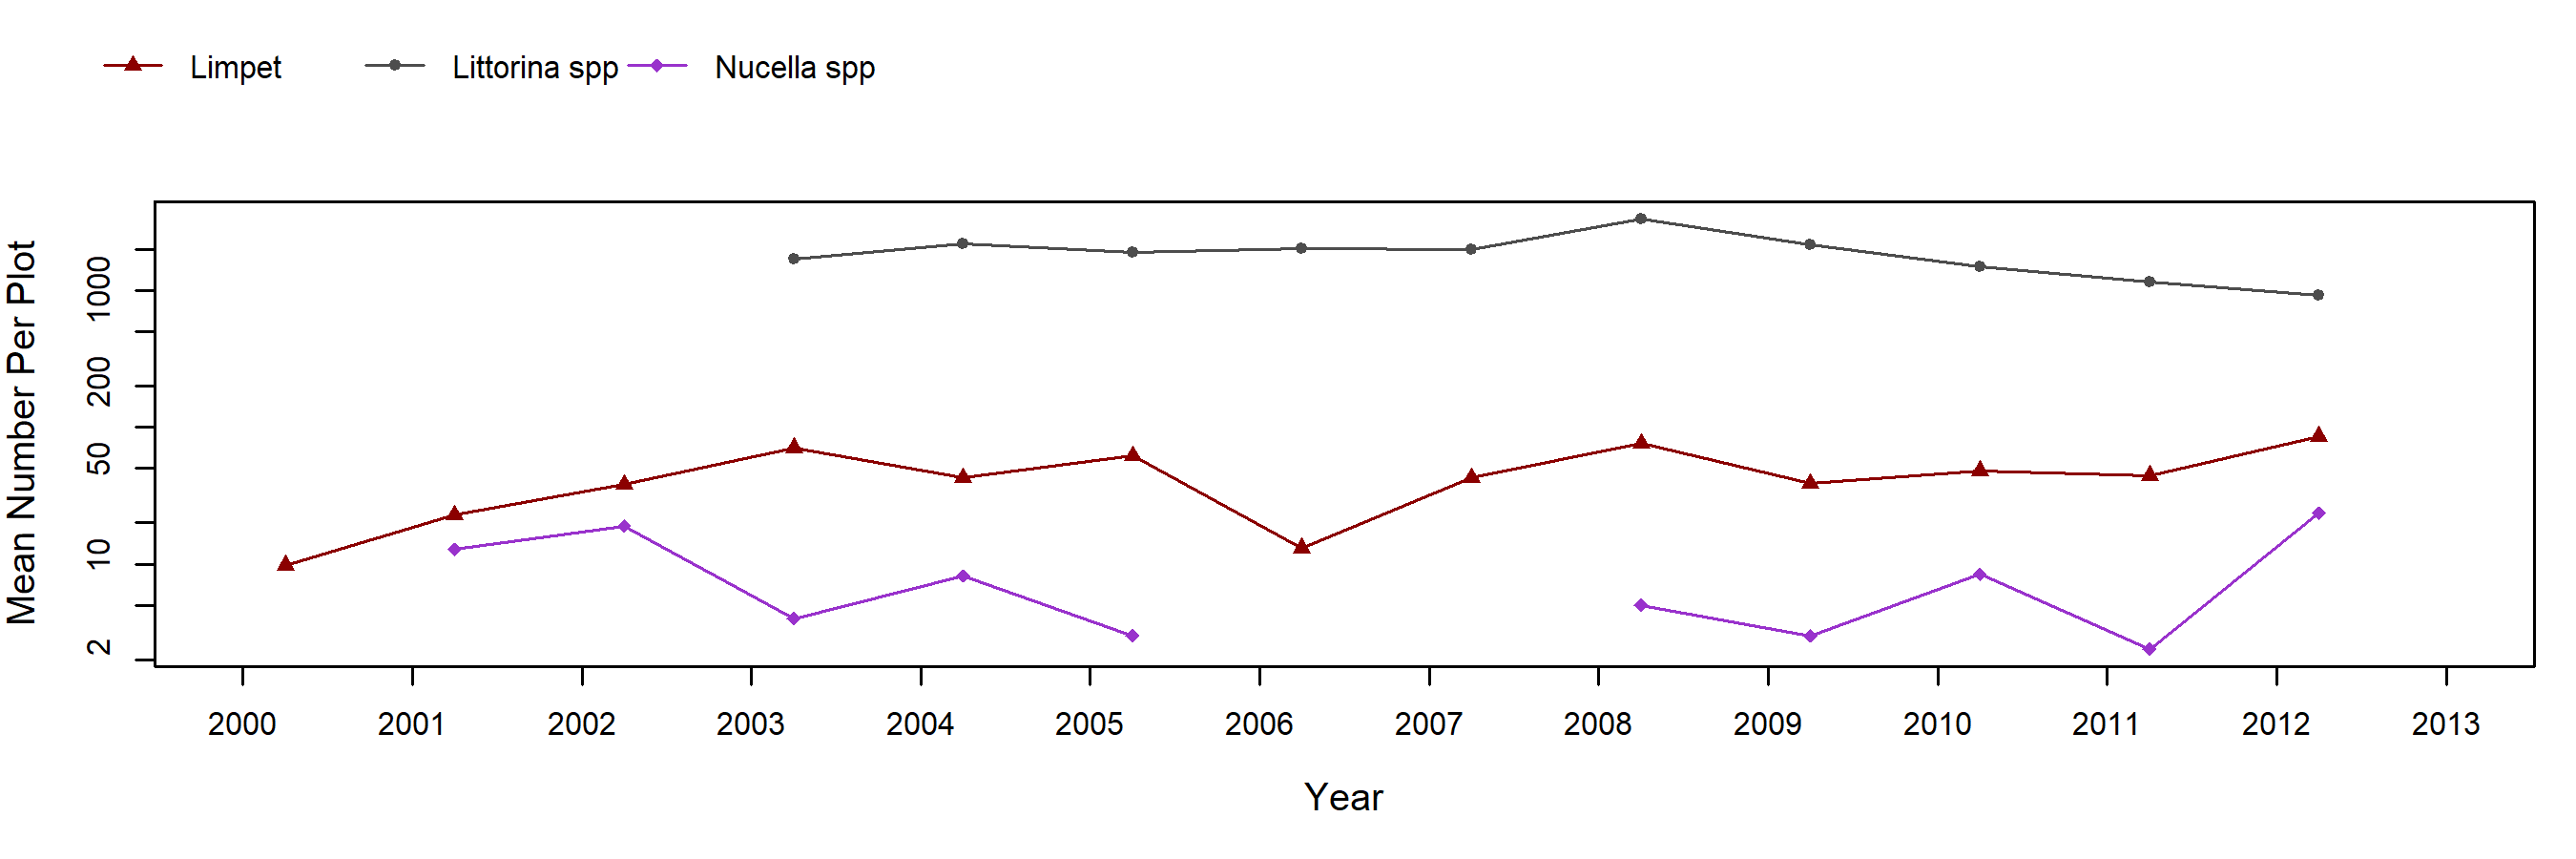 Bob Creek Pelvetiopsis trend plot